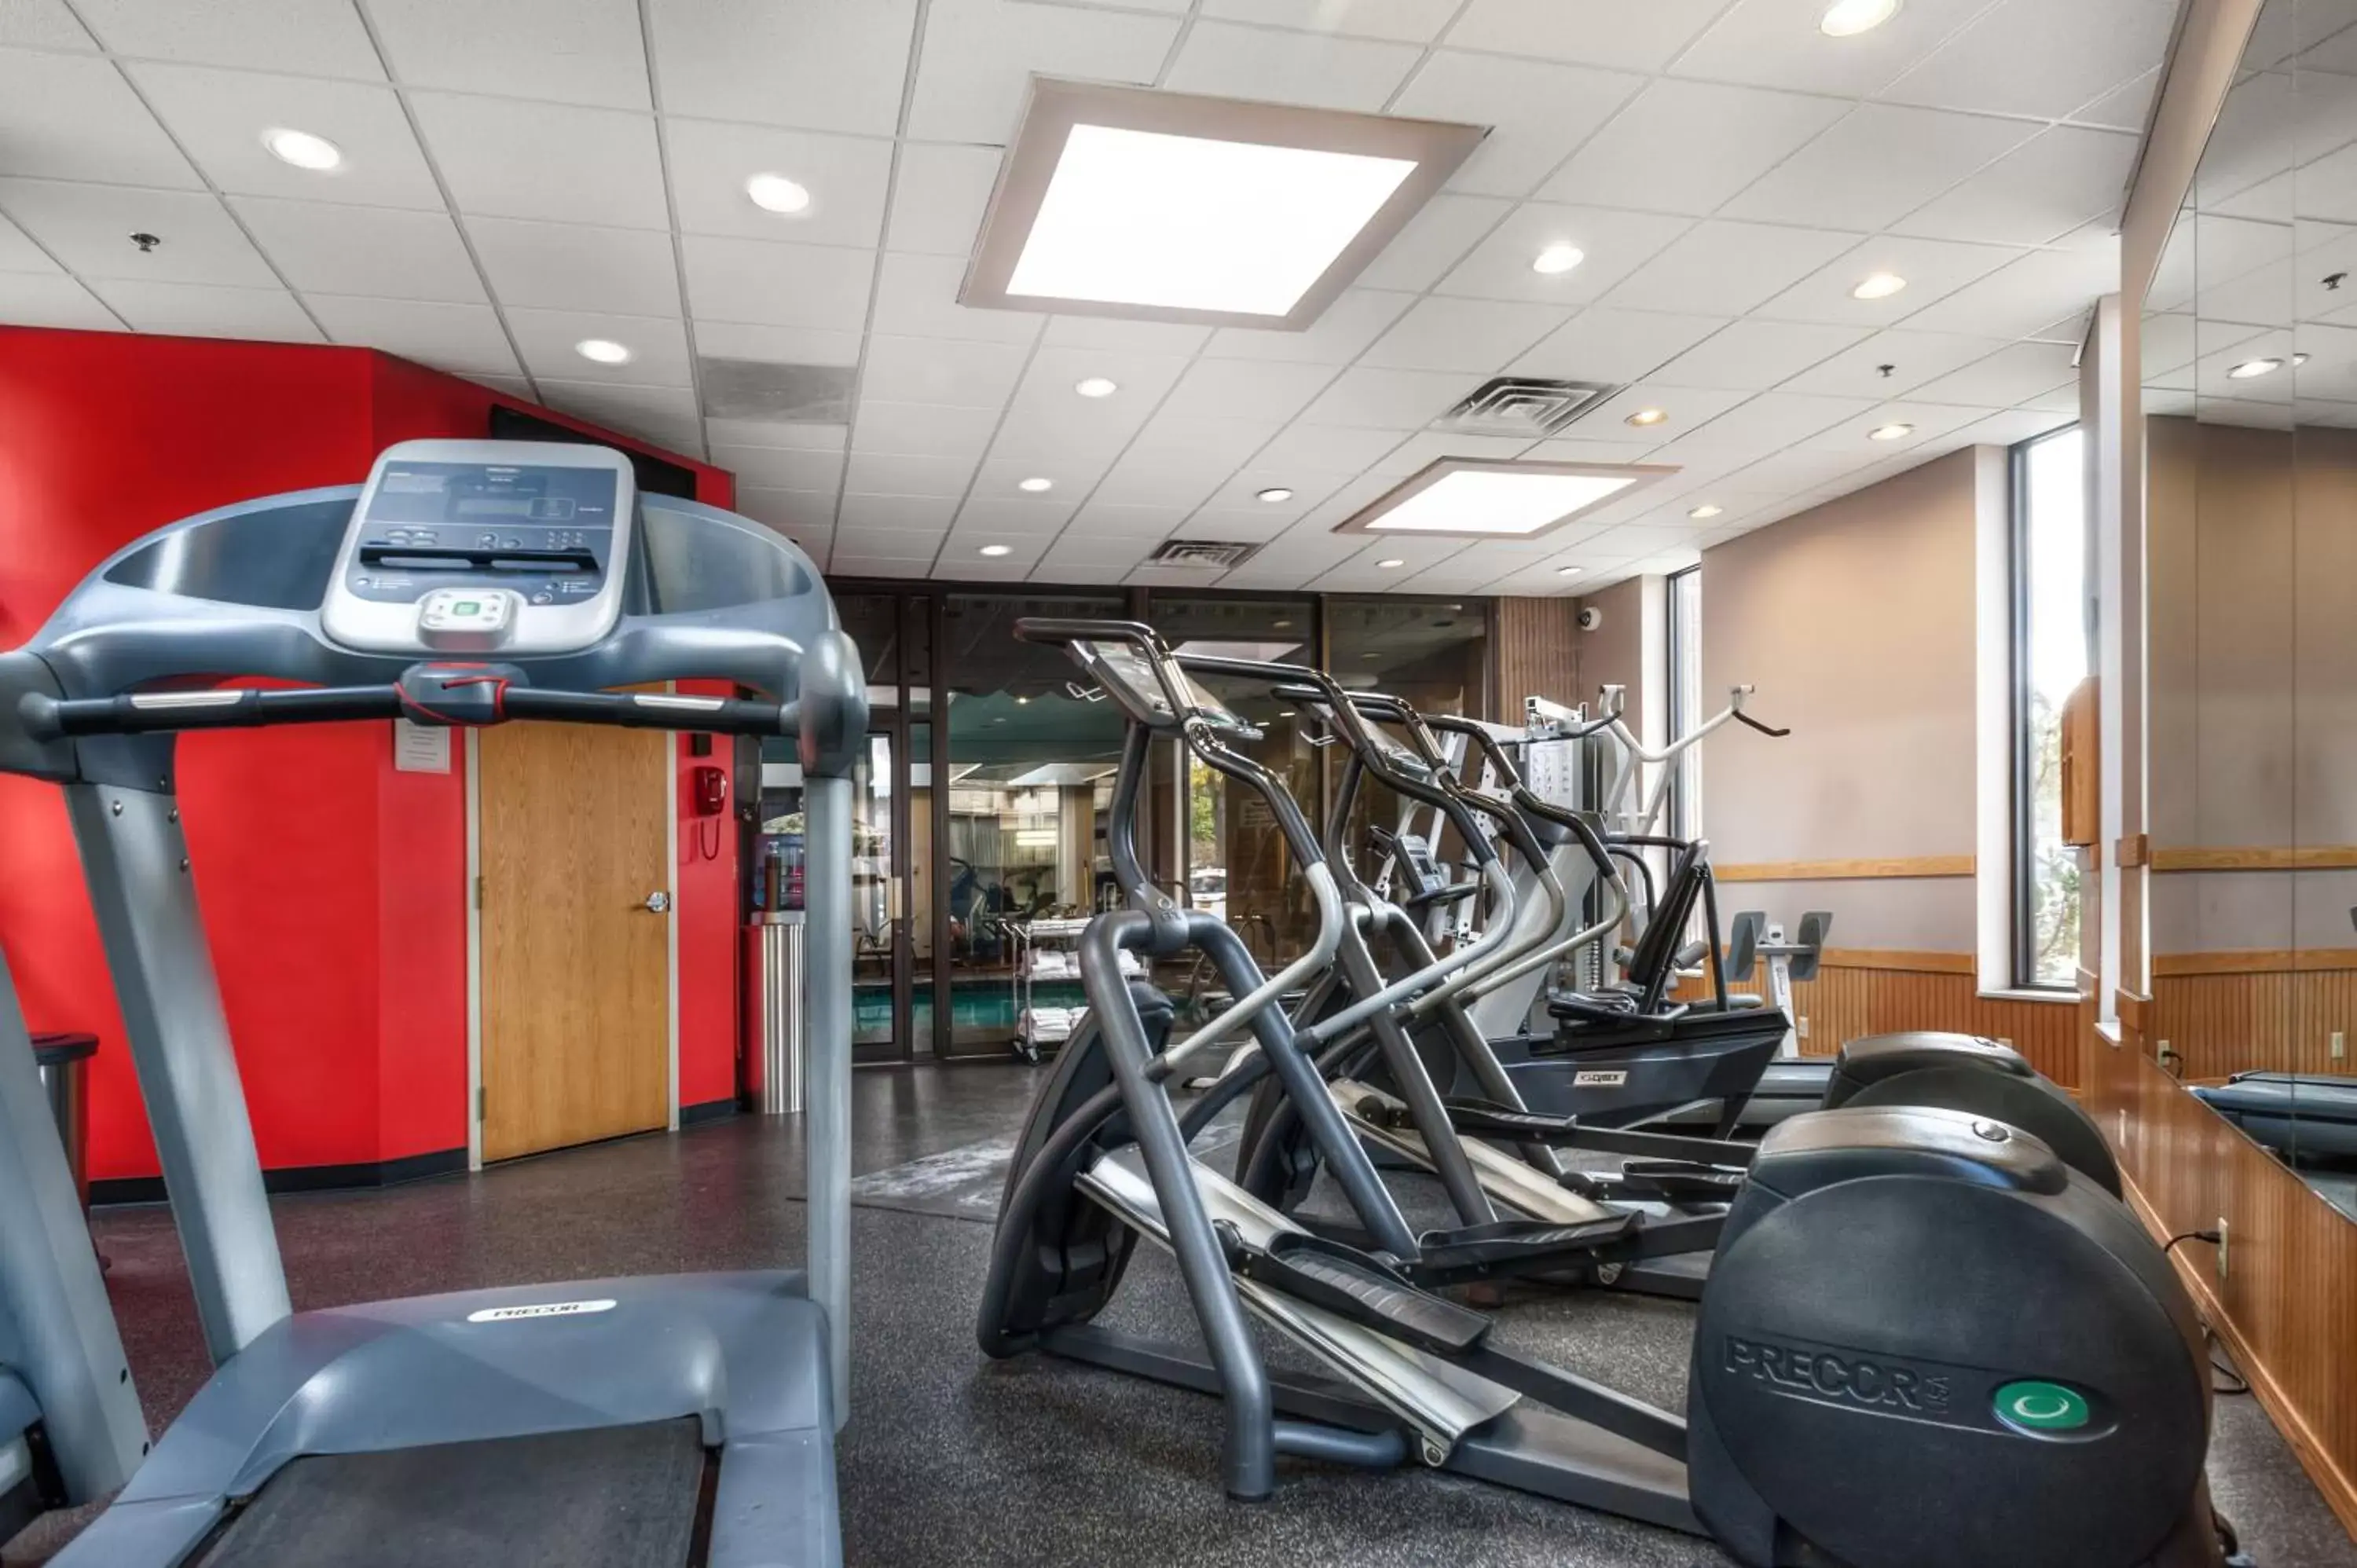 Fitness centre/facilities, Fitness Center/Facilities in Radisson Hotel Corning